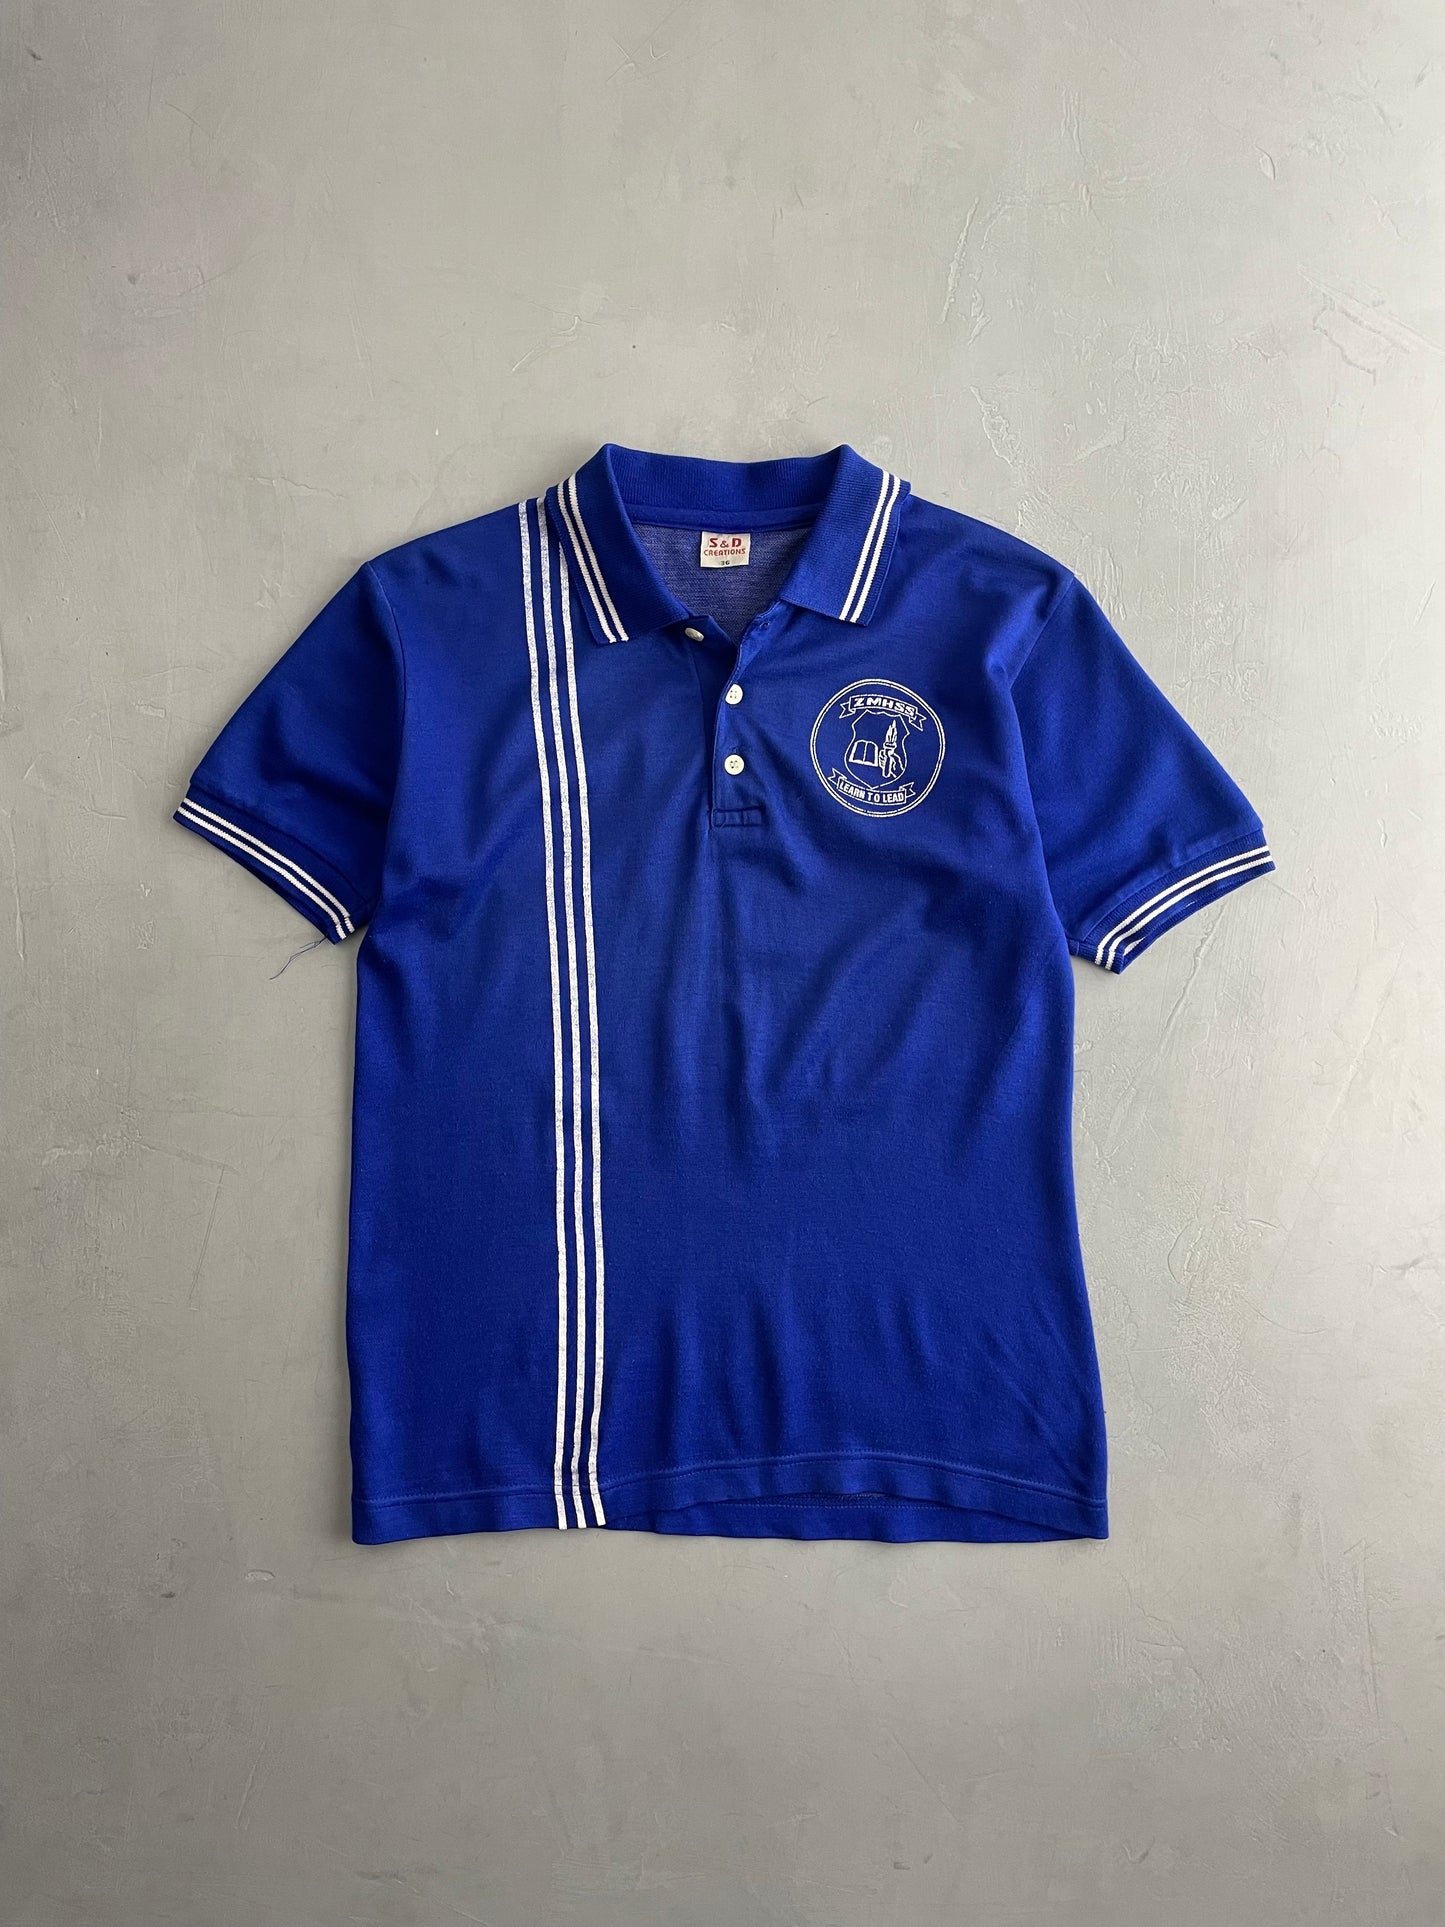 70's Zion School Shirt [S]